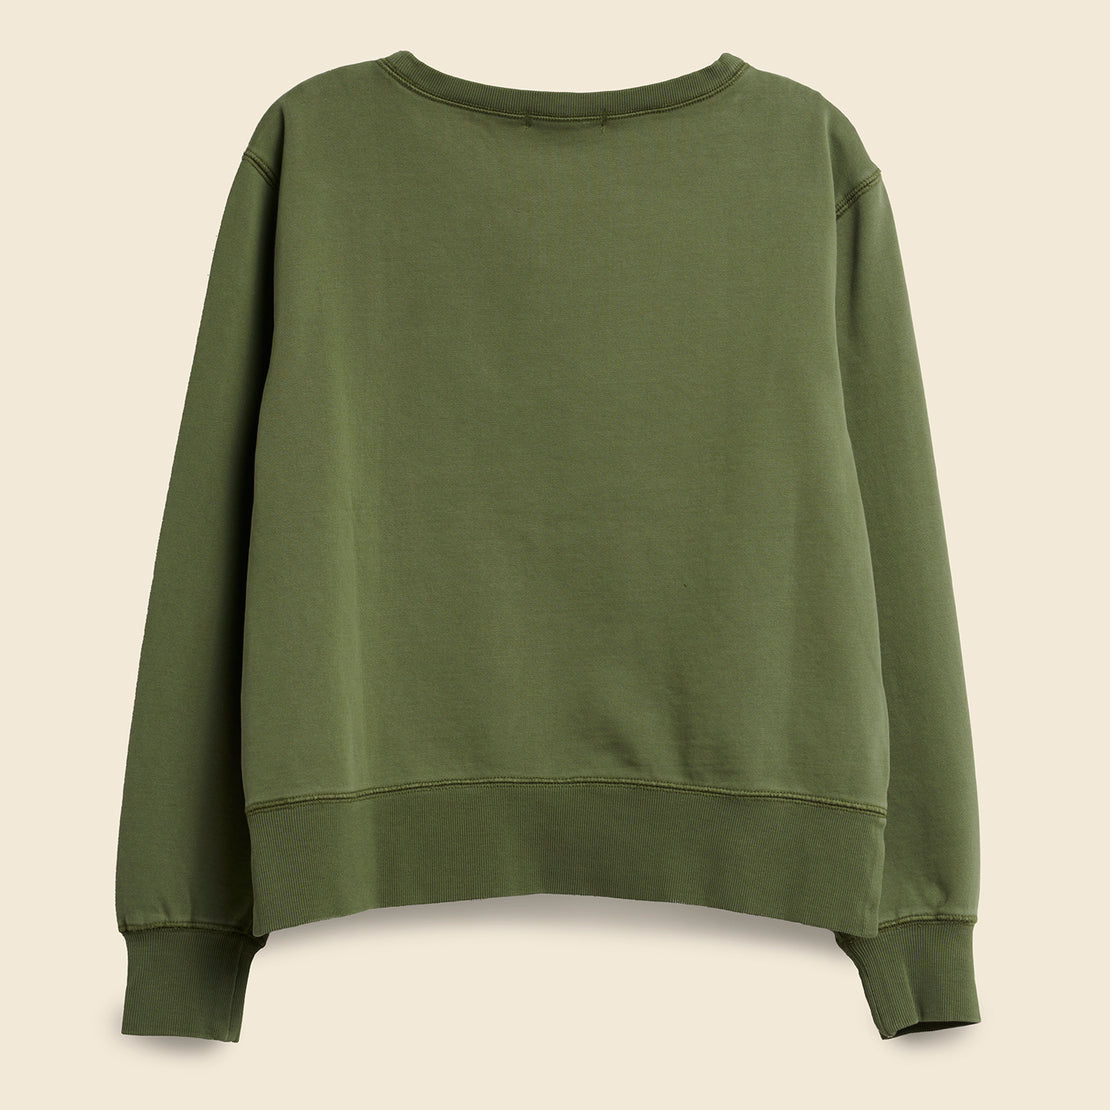 Lakeside Sweatshirt - Army Green - Alex Mill - STAG Provisions - W - Tops - L/S Fleece